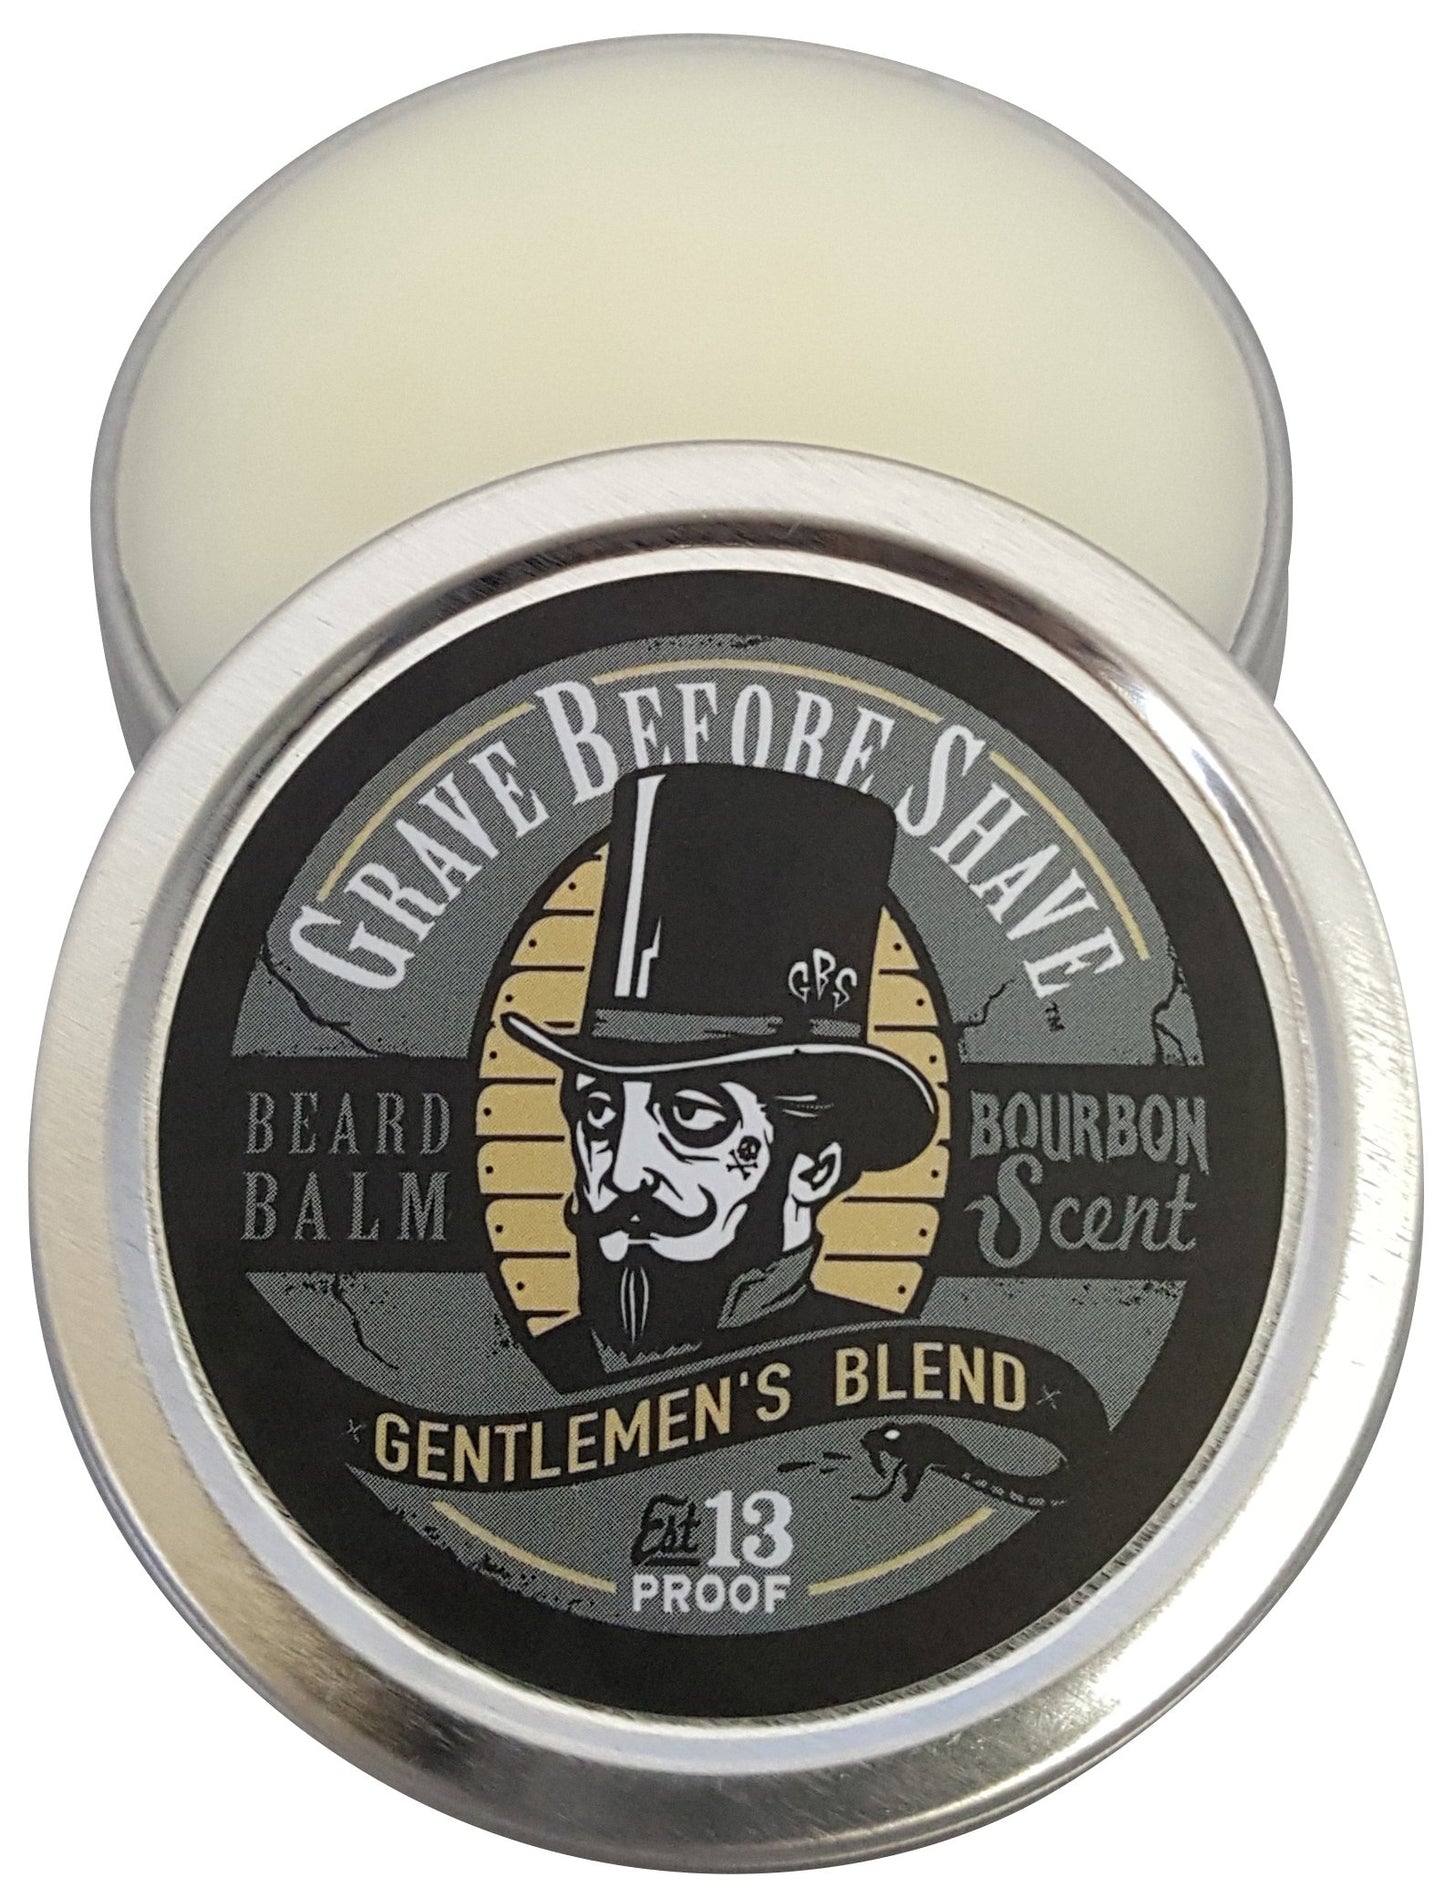 GRAVE BEFORE SHAVE Gentlemen's Blend Beard Balm (Bourbon Scent) (2 oz.)